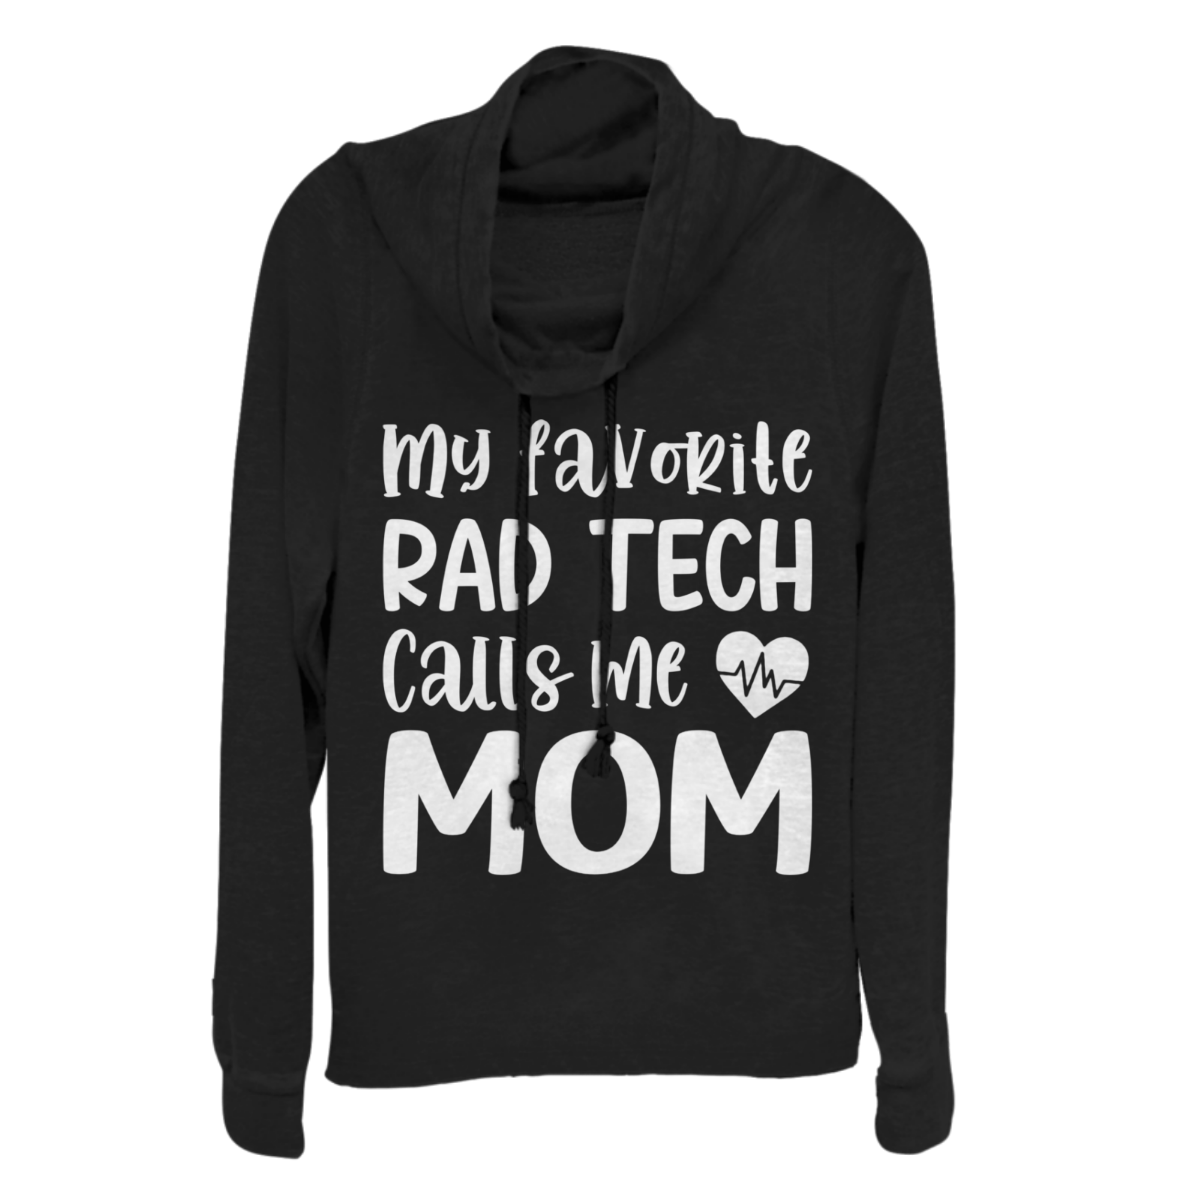 rad tech sweatshirts